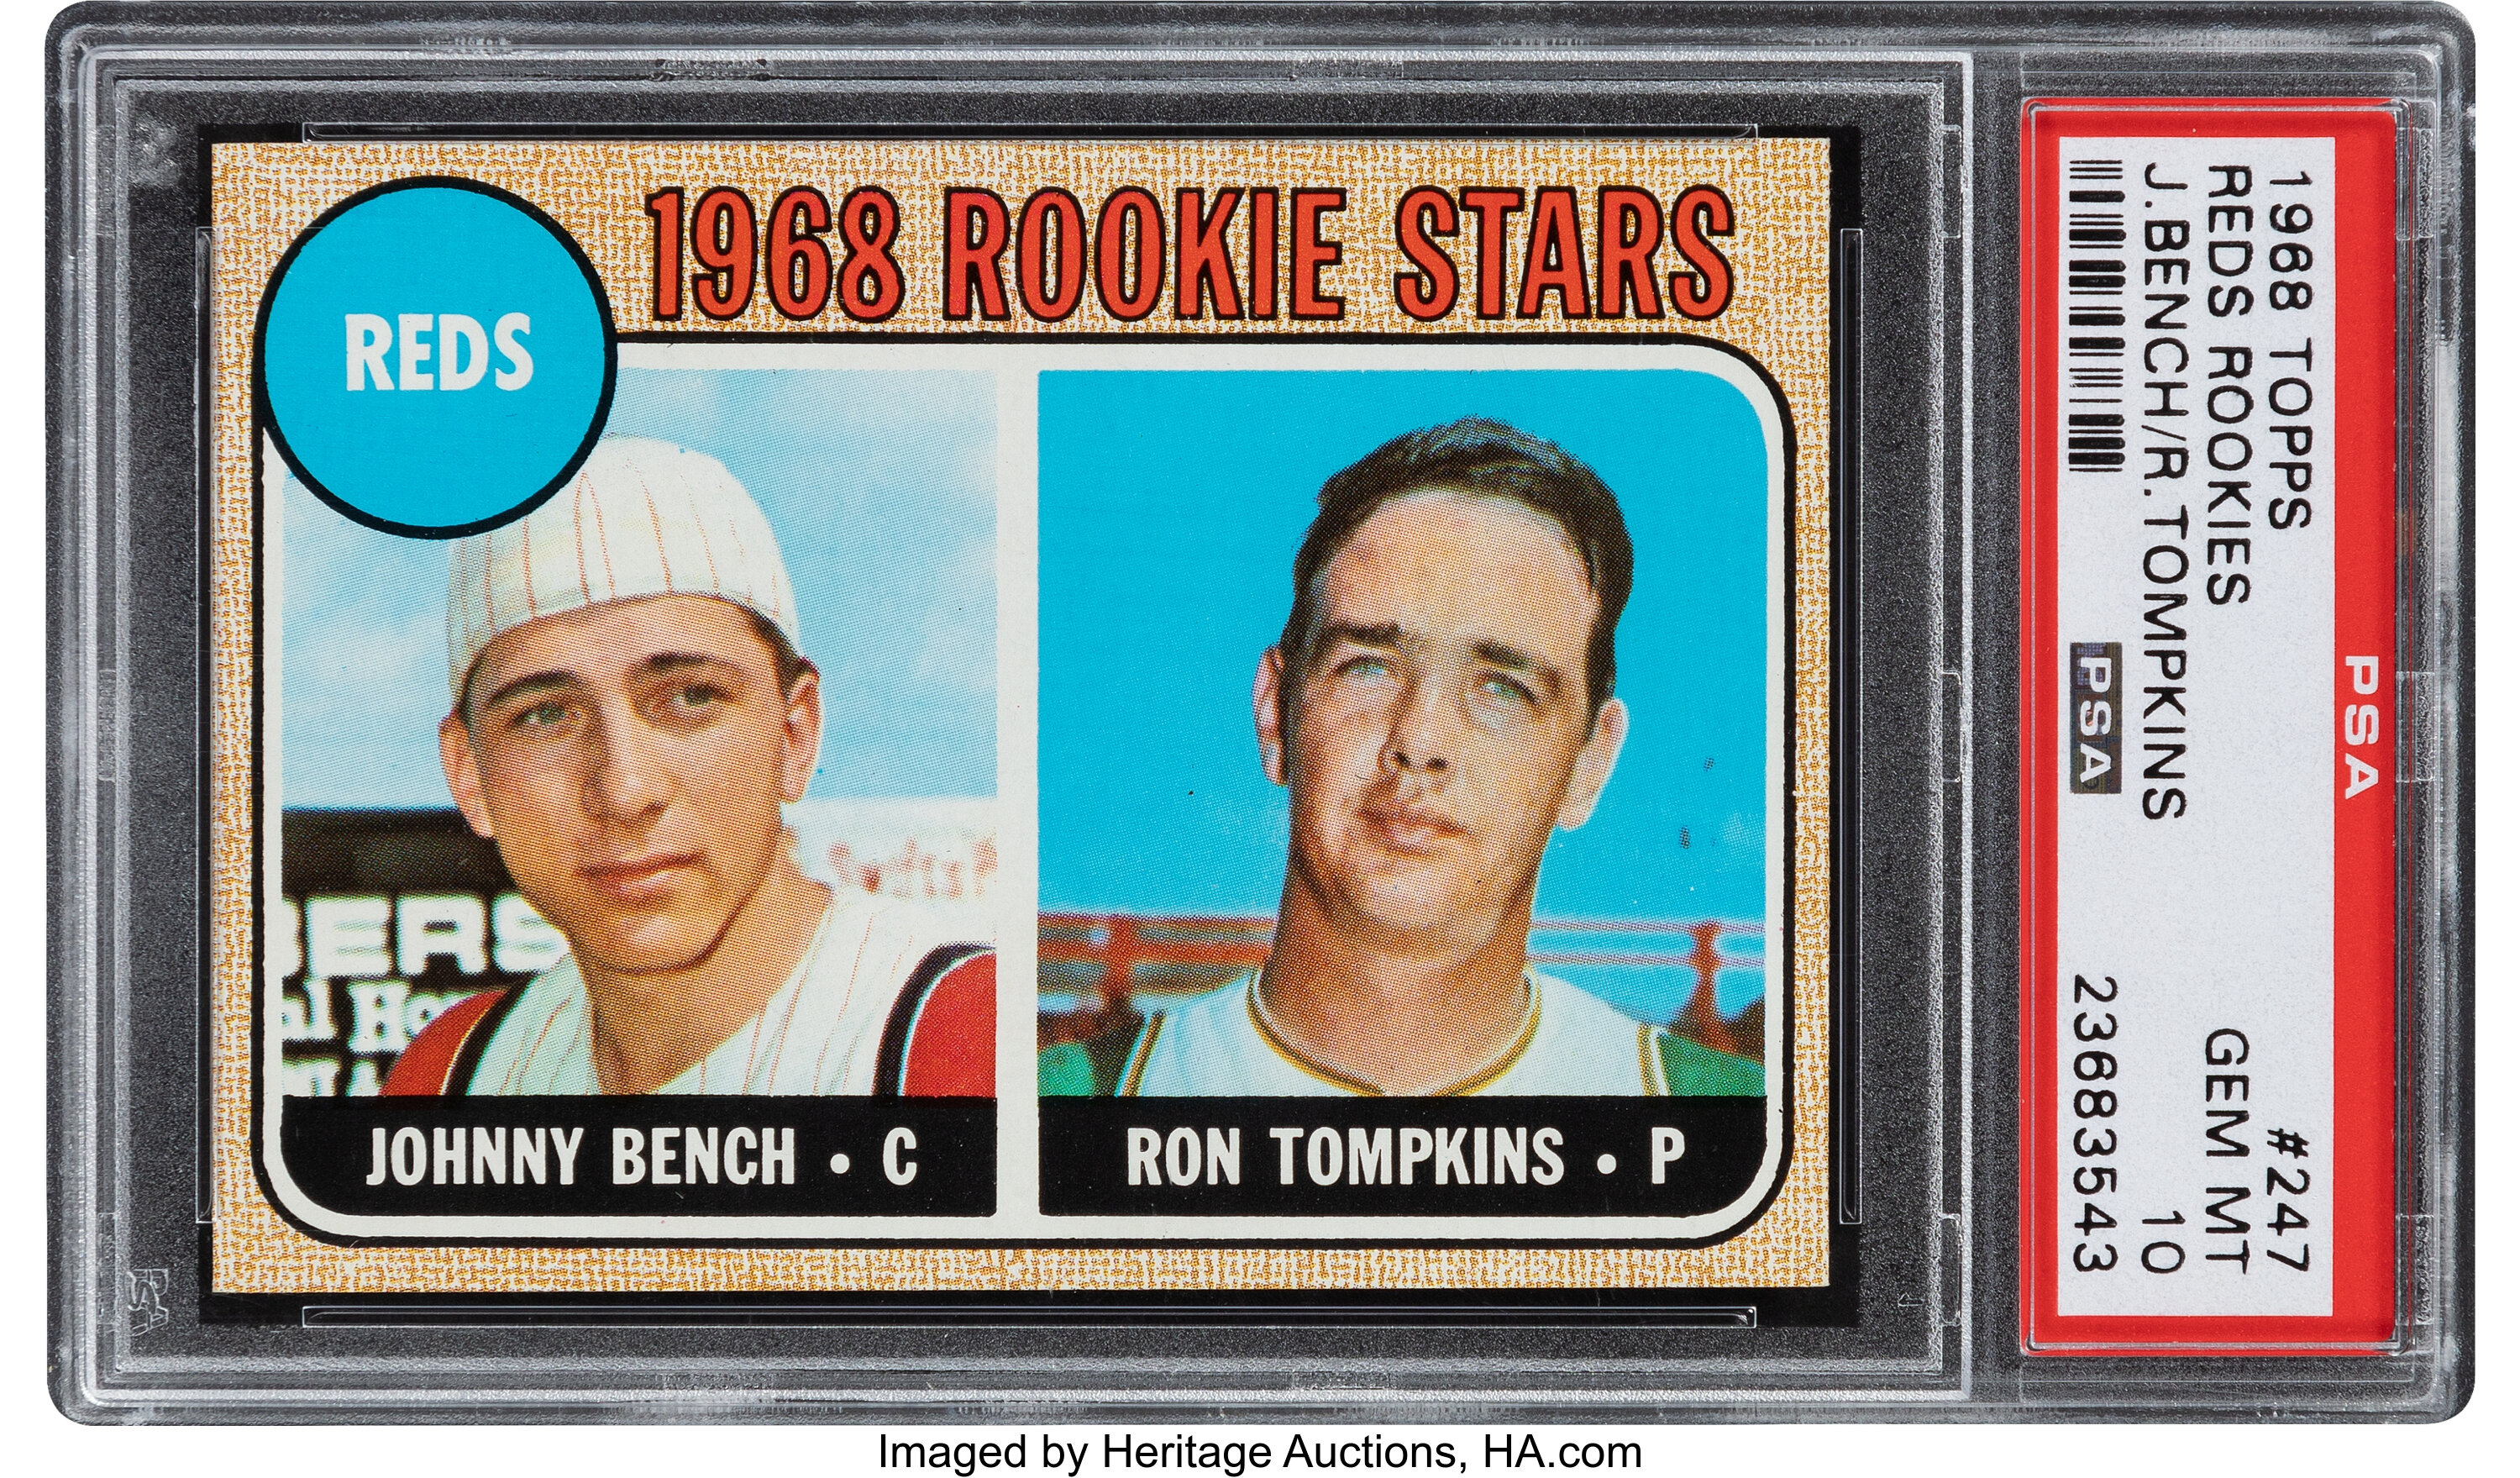 Cincinnati Reds legend Johnny Bench to auction off memorabilia